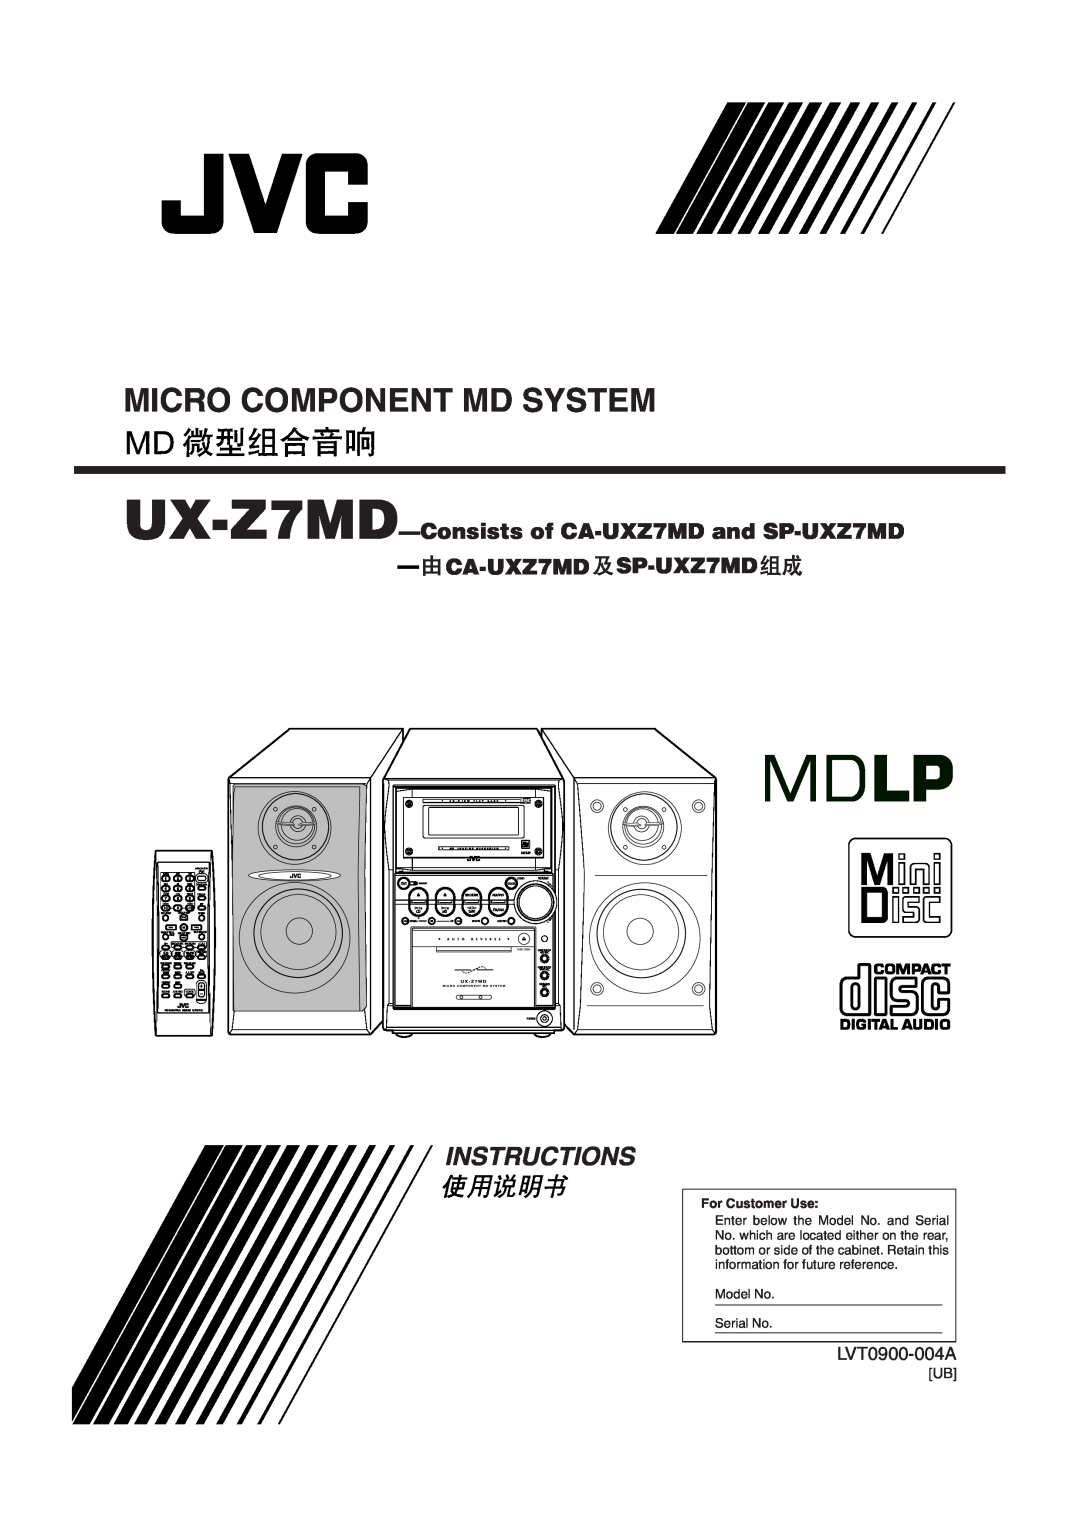 JVC manual UX-Z7MD-Consistsof CA-UXZ7MDand SP-UXZ7MD, CA-UXZ7MD SP-UXZ7MD, Micro Component Md System, Instructions 